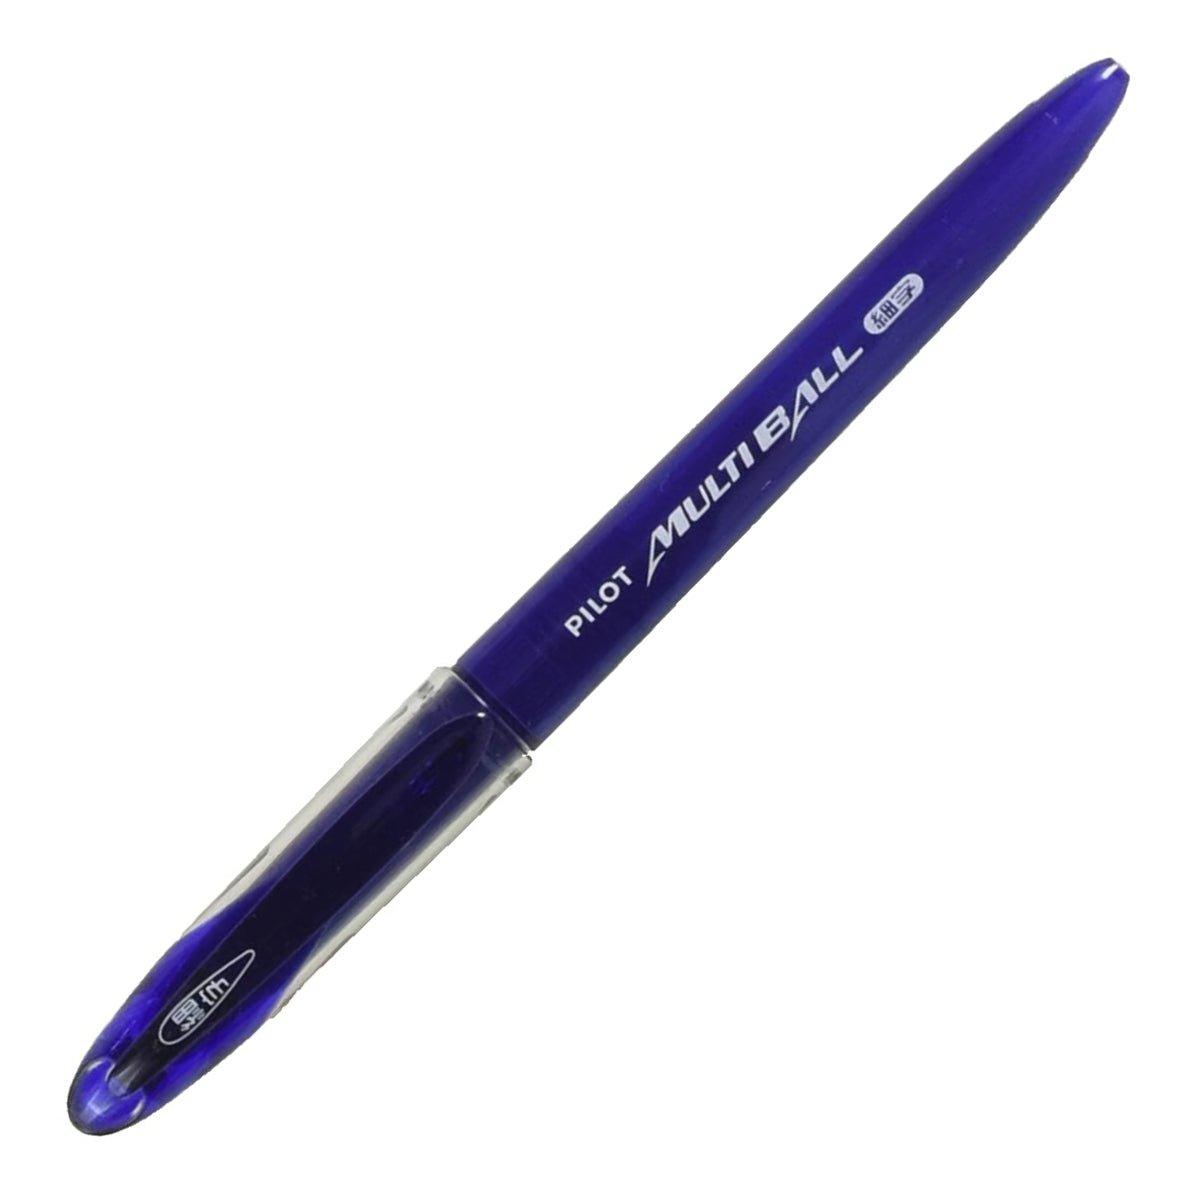 PILOT MultiBall water-based pen signature pen marker pen Sharpie marker art pen medium word LM-10M fine word LM-10F - CHL-STORE 